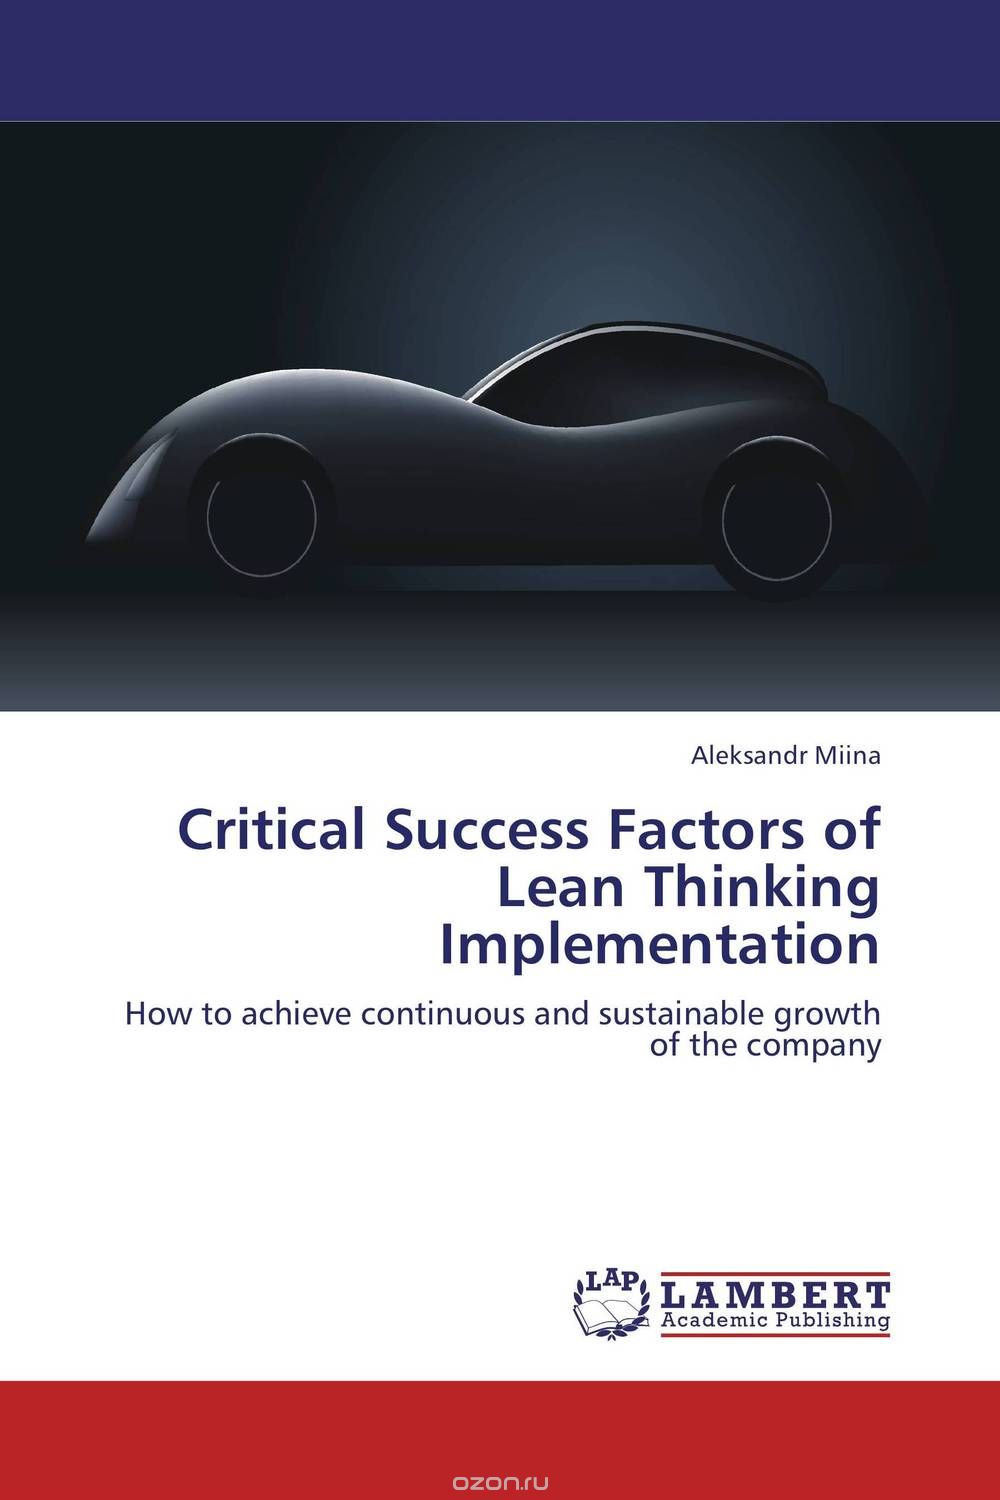 Скачать книгу "Critical Success Factors of Lean Thinking Implementation"